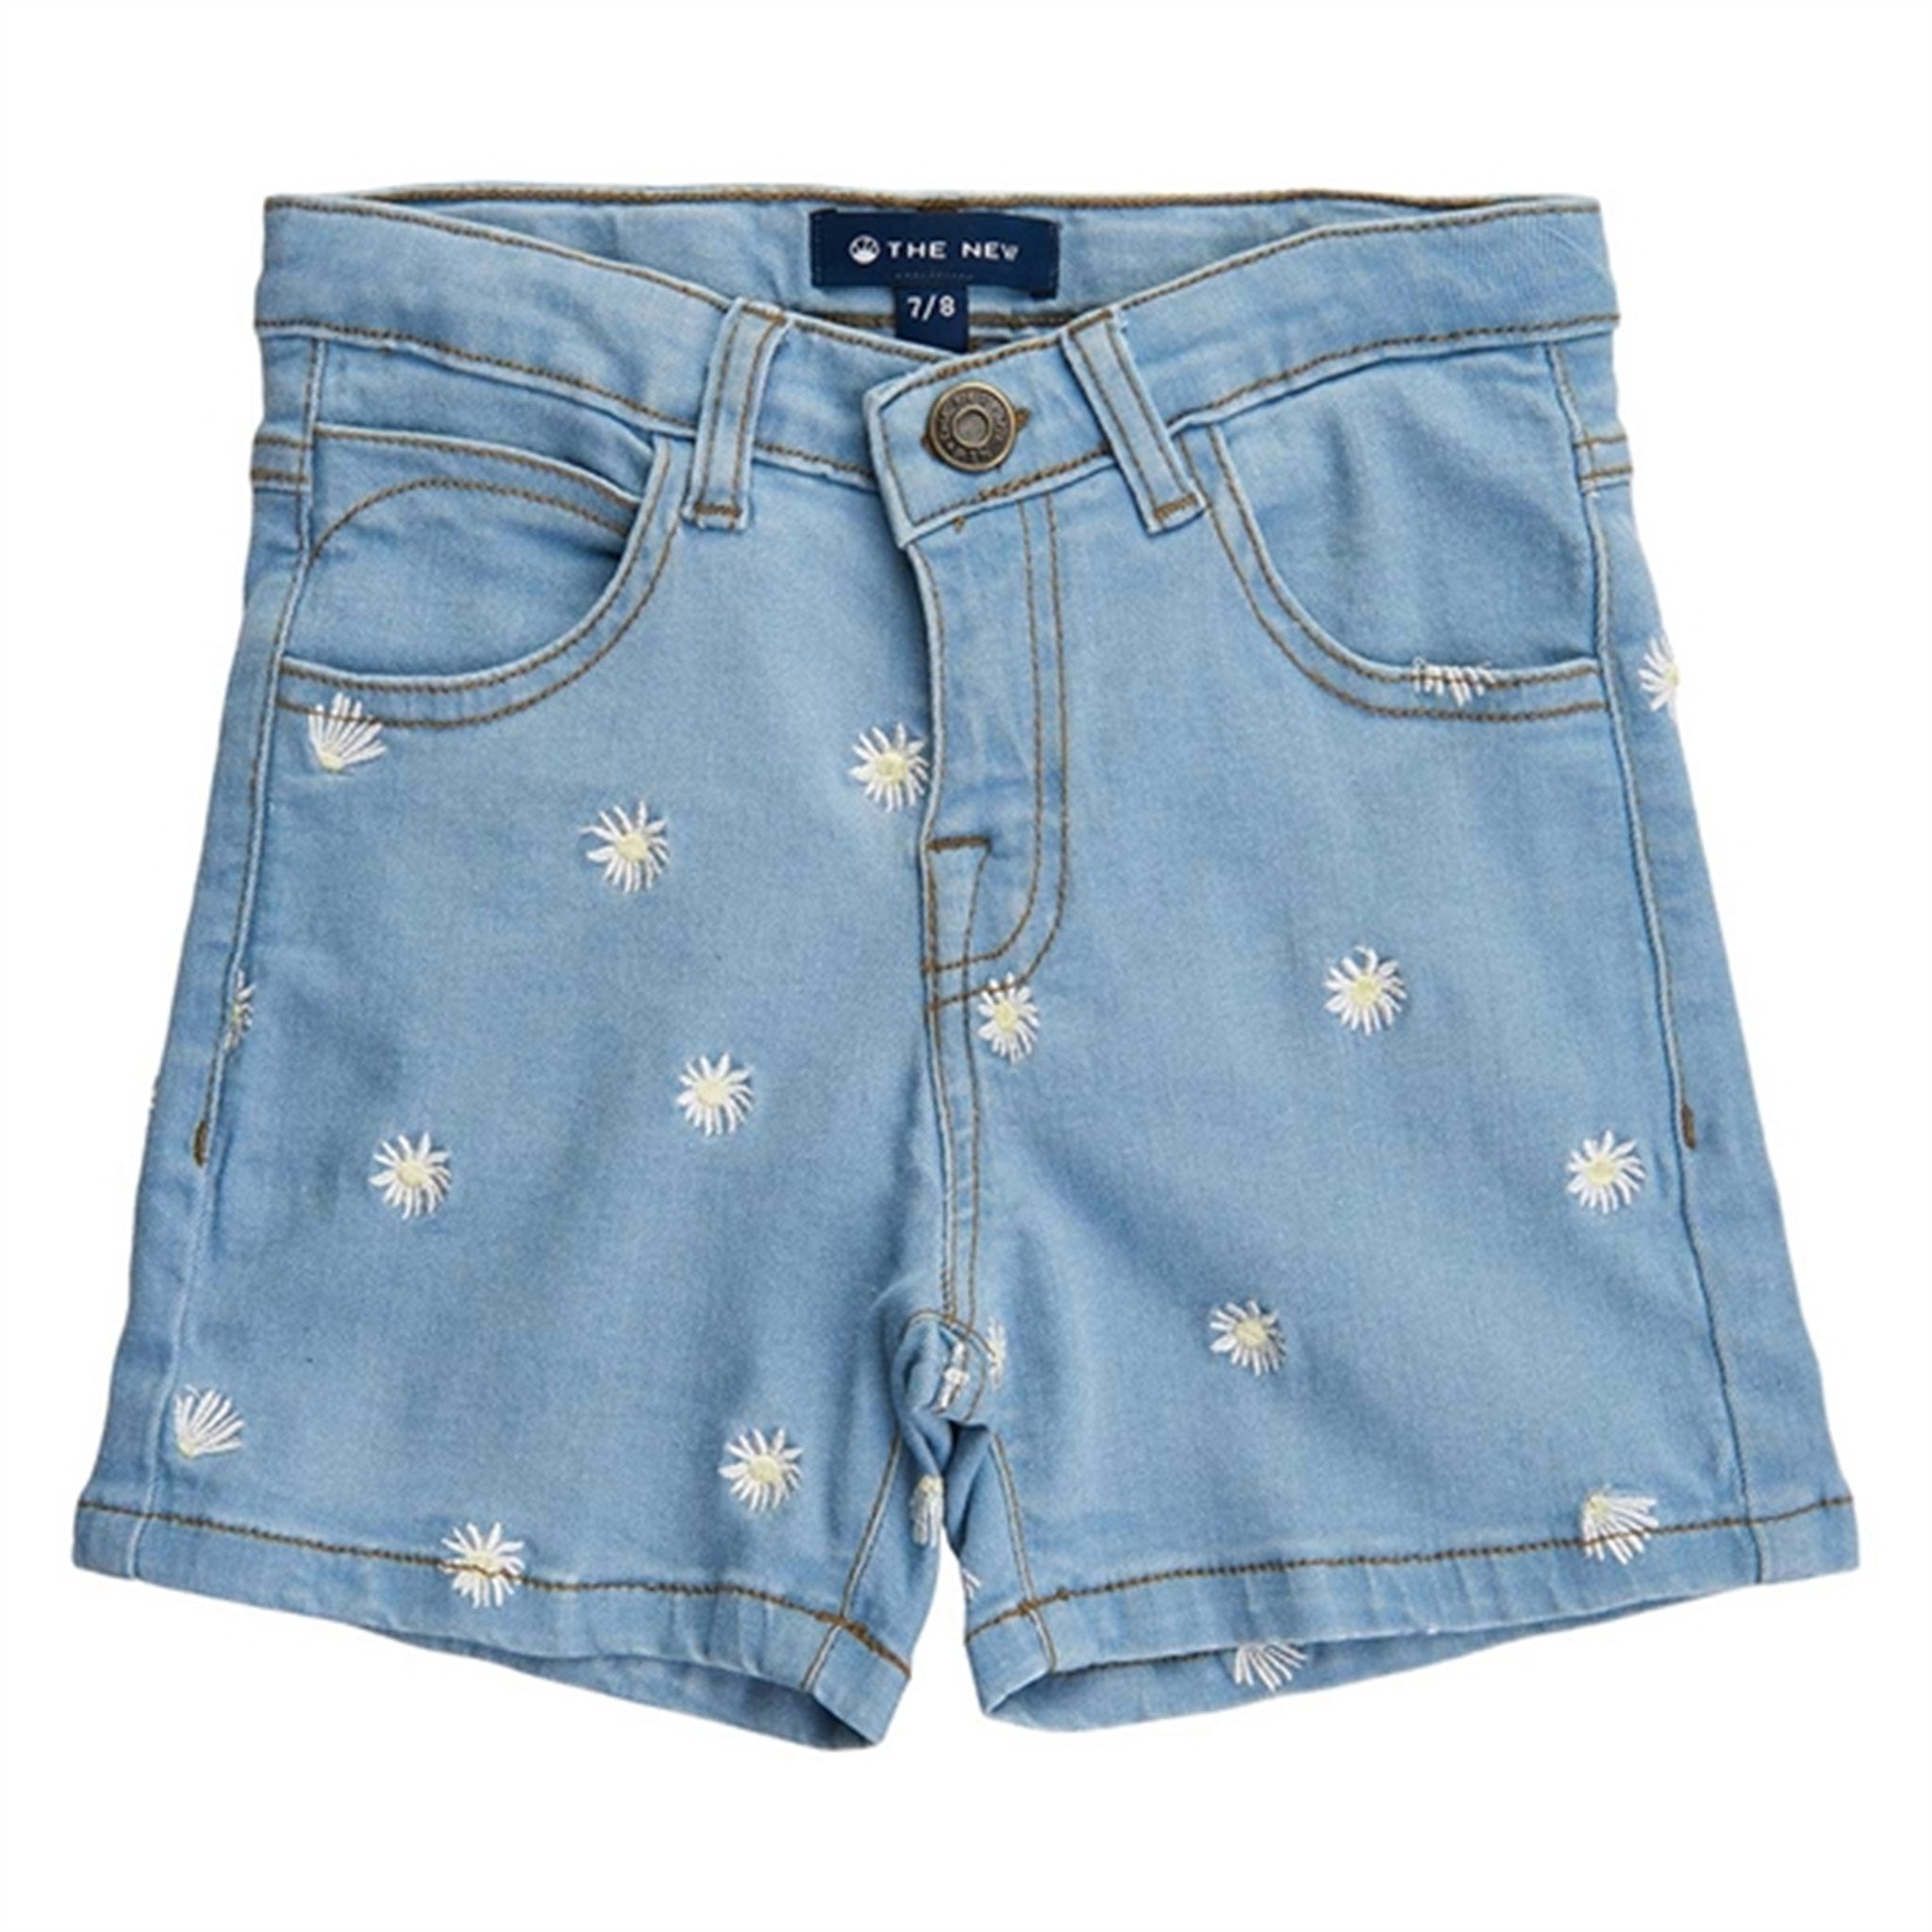 The New Light Blue Denim Broidery Denim Shorts